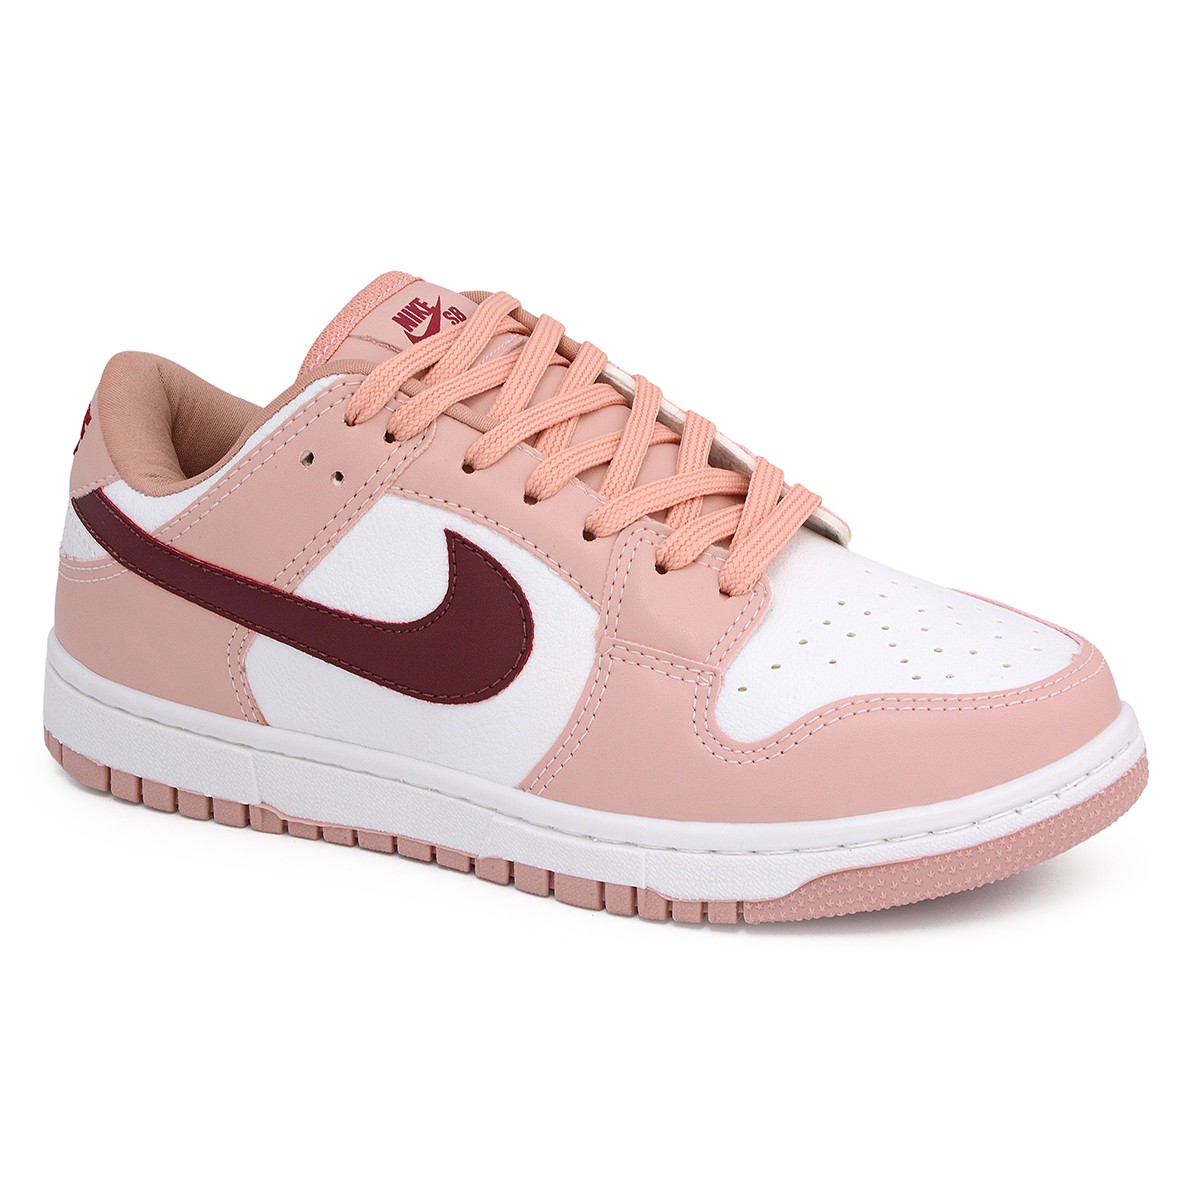 Tênis SB Dunk Low Pink Foam - rosa / vinho - M.Shoes Imports